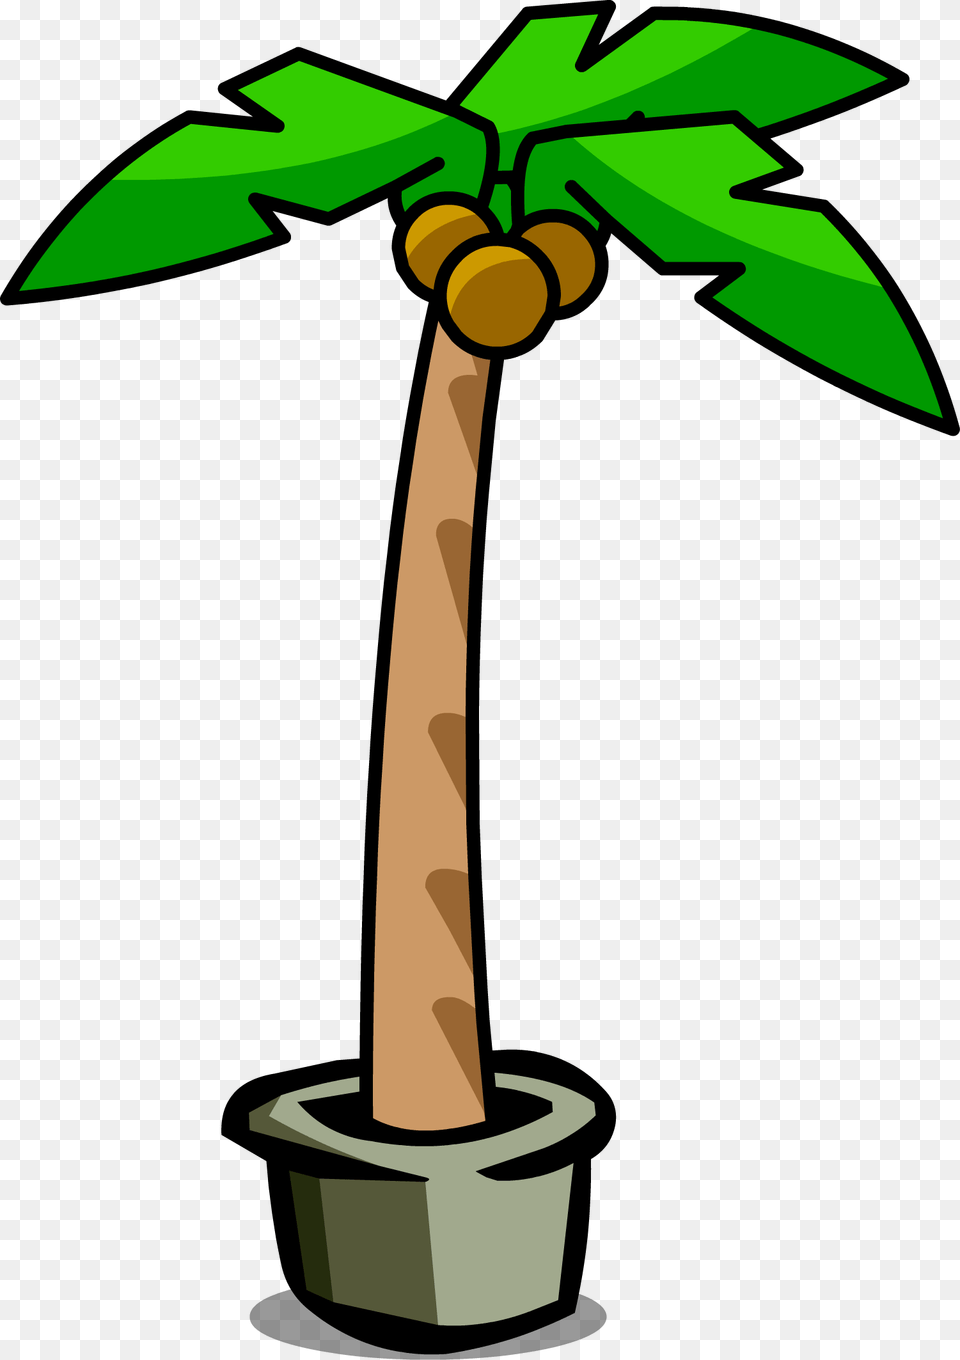 Palm Tree Sprite Club Penguin Palm Tree, Palm Tree, Plant, Leaf, Cross Free Png Download